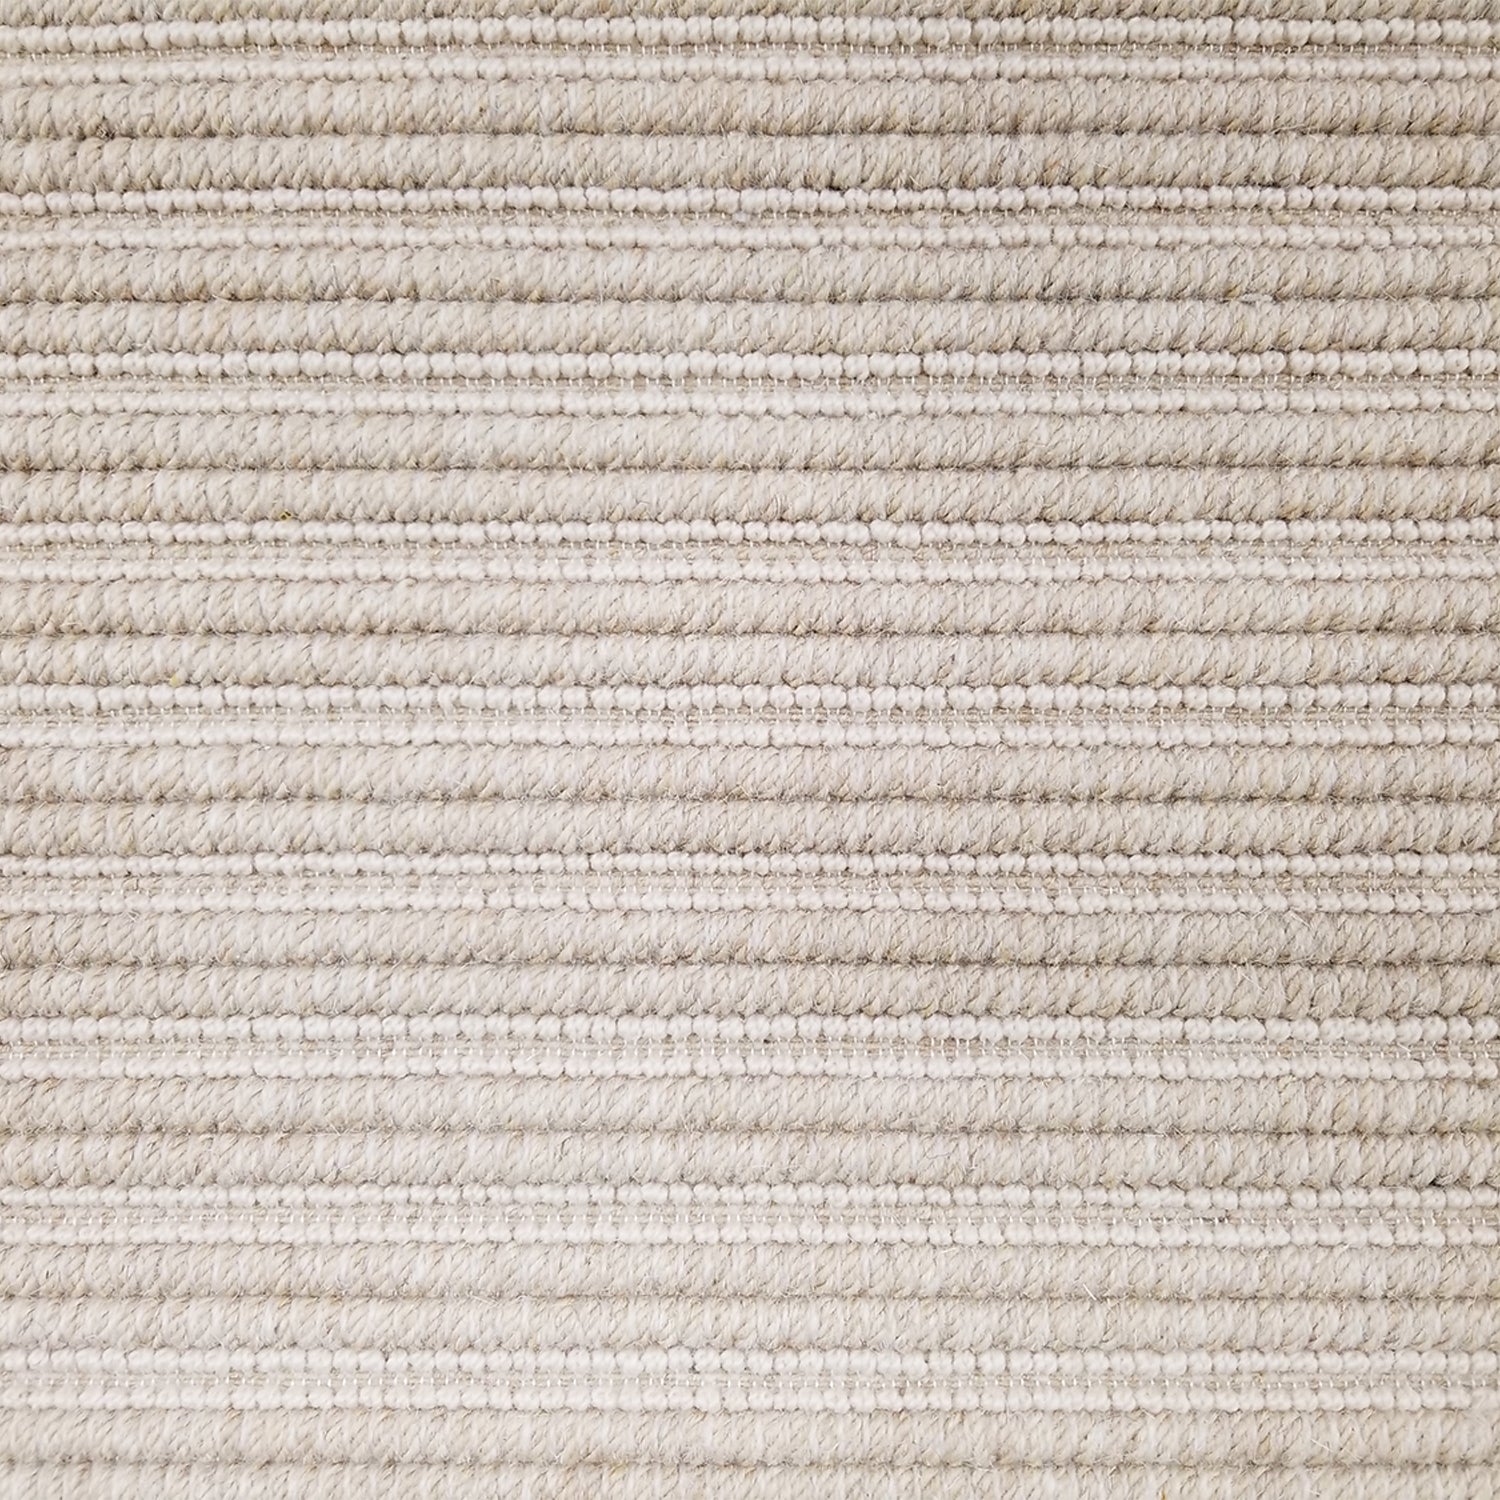 Wool broadloom carpet swatch in a textured stripe weave in a light camel colorway.